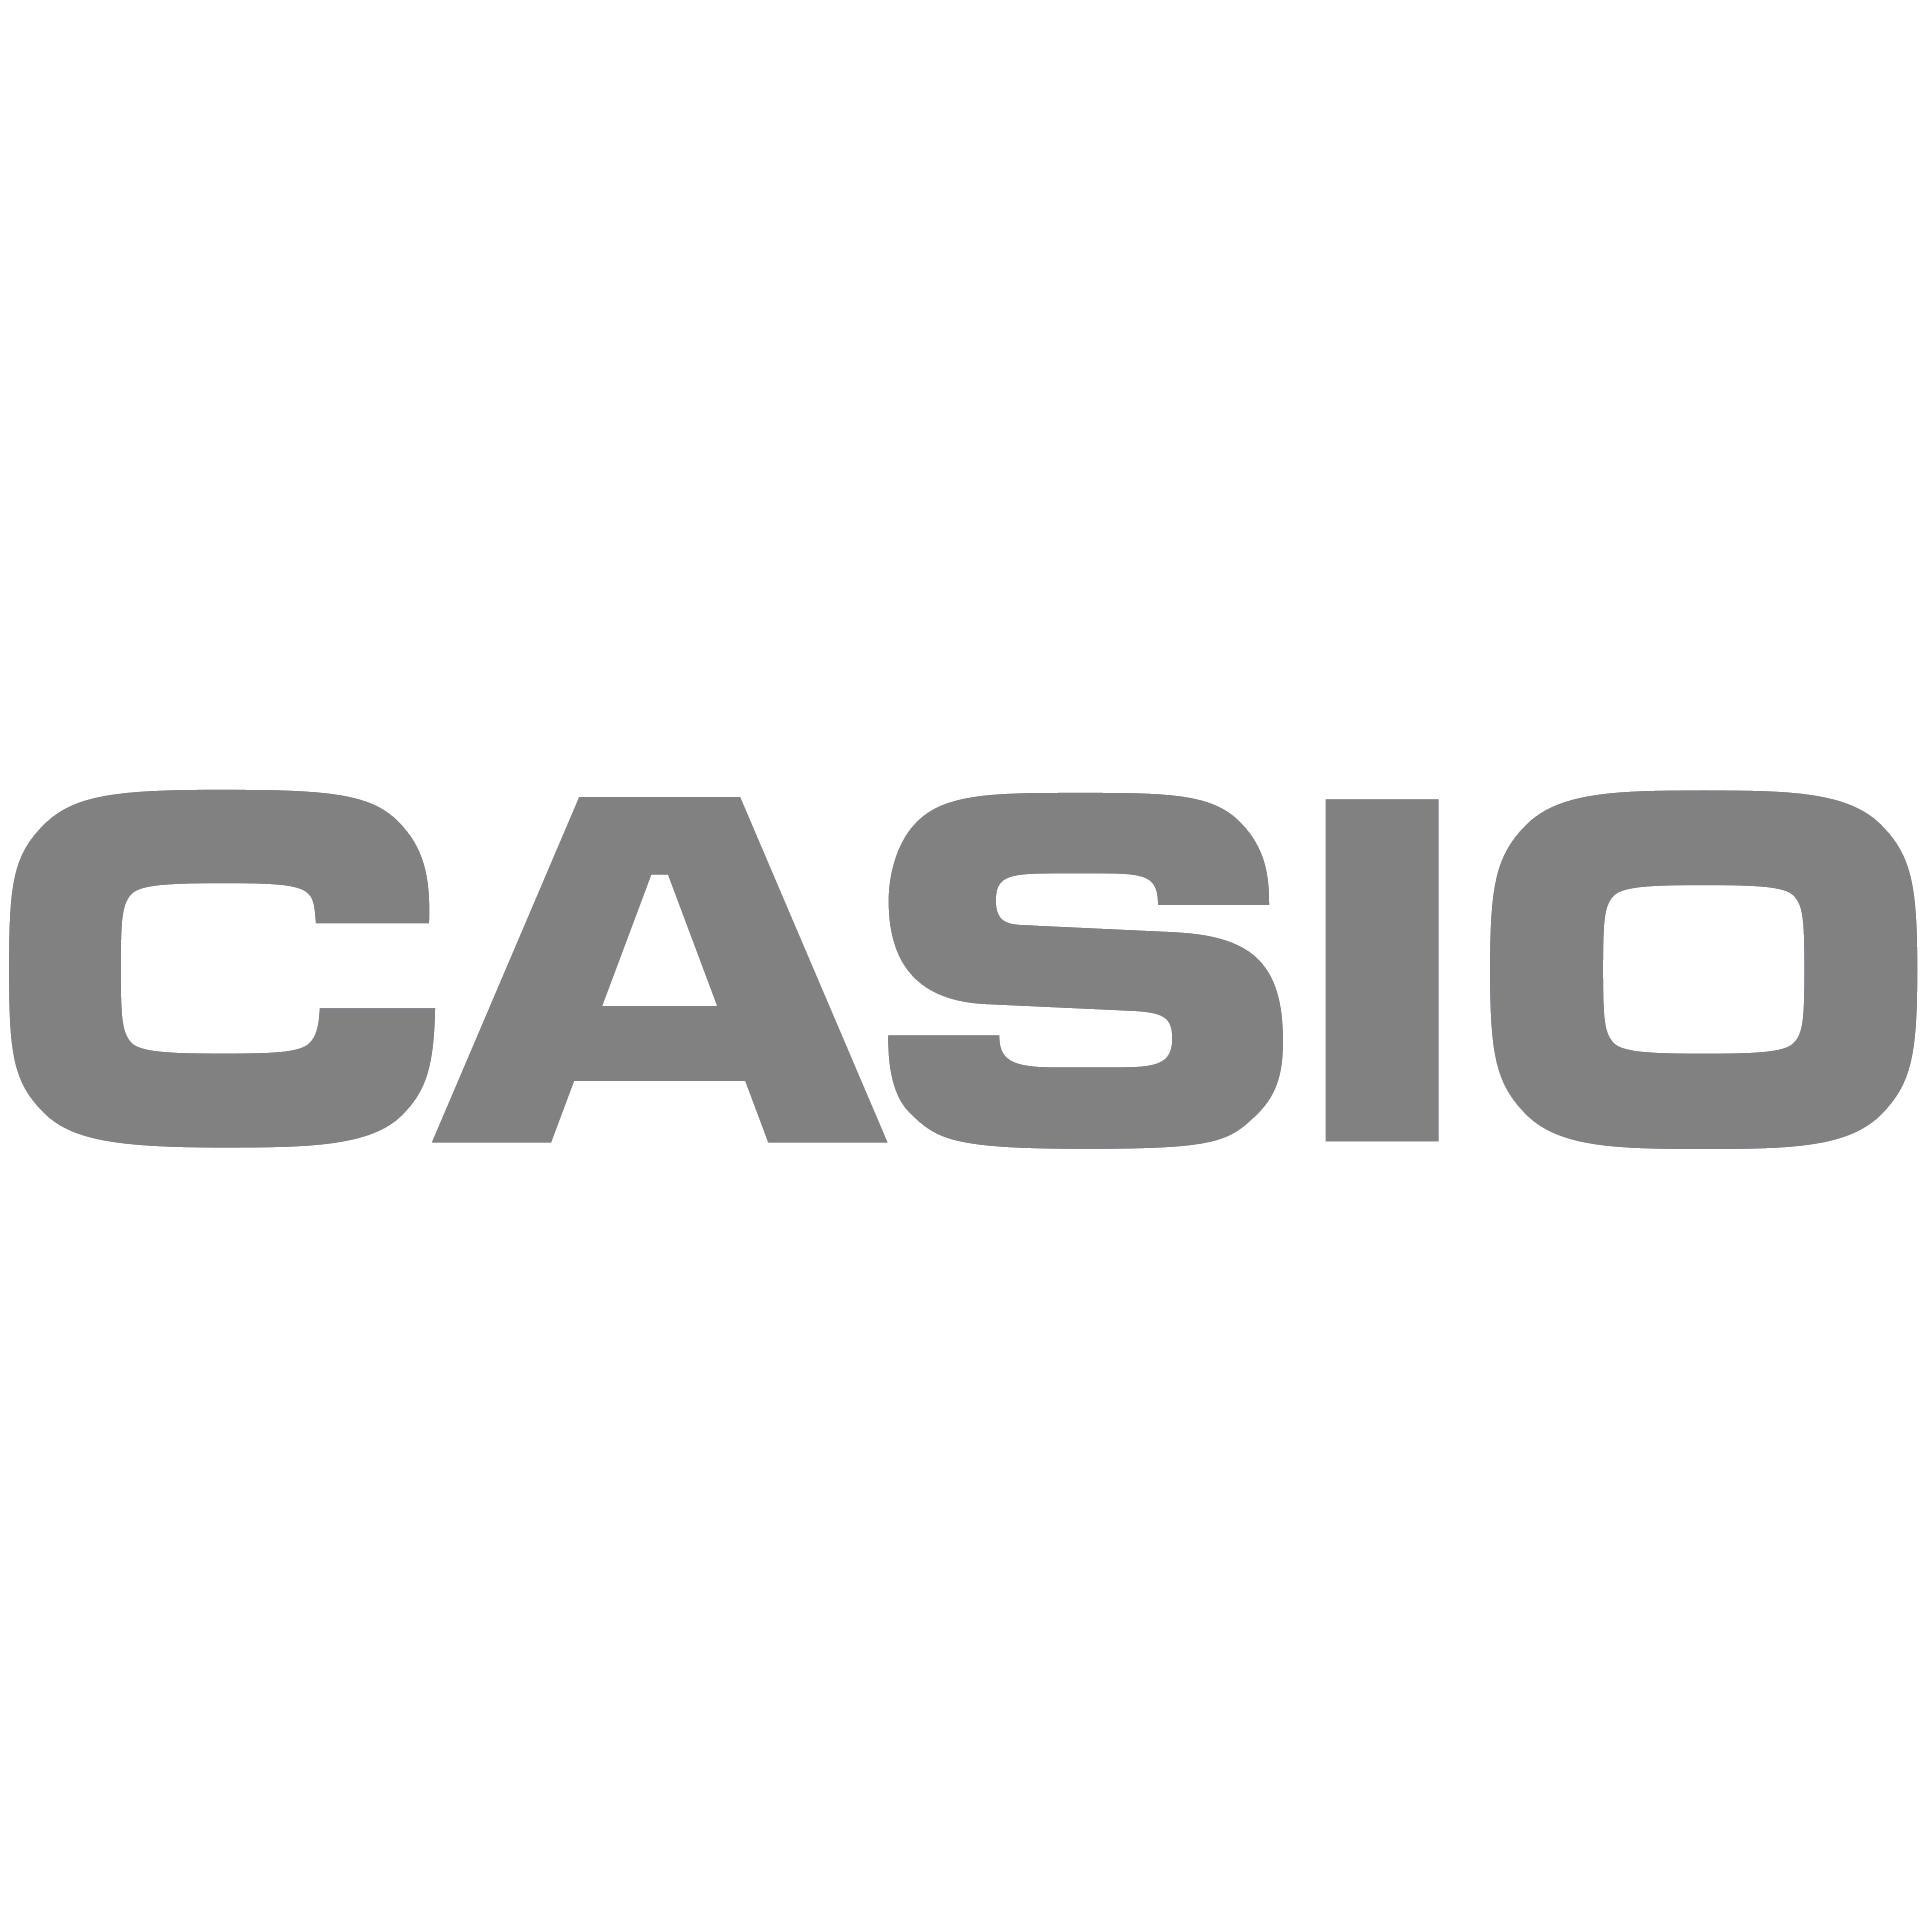 Casio.png